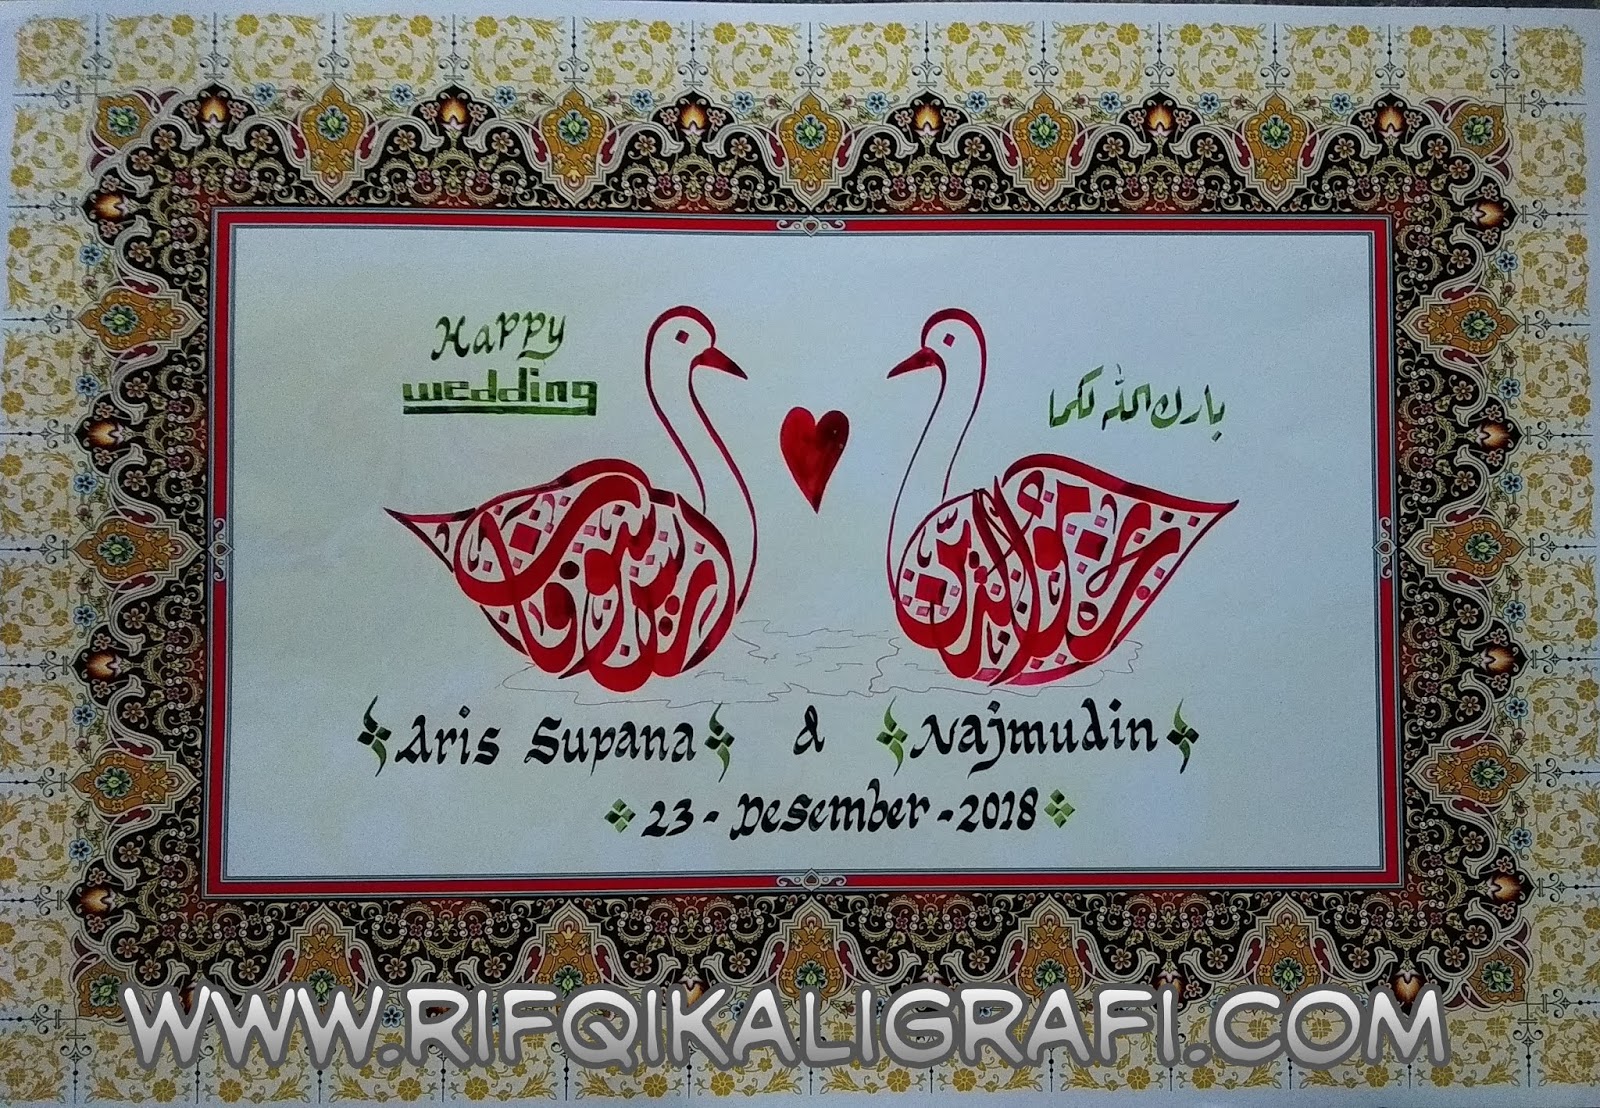  Kaligrafi  nama  Rifqi Kaligrafi 